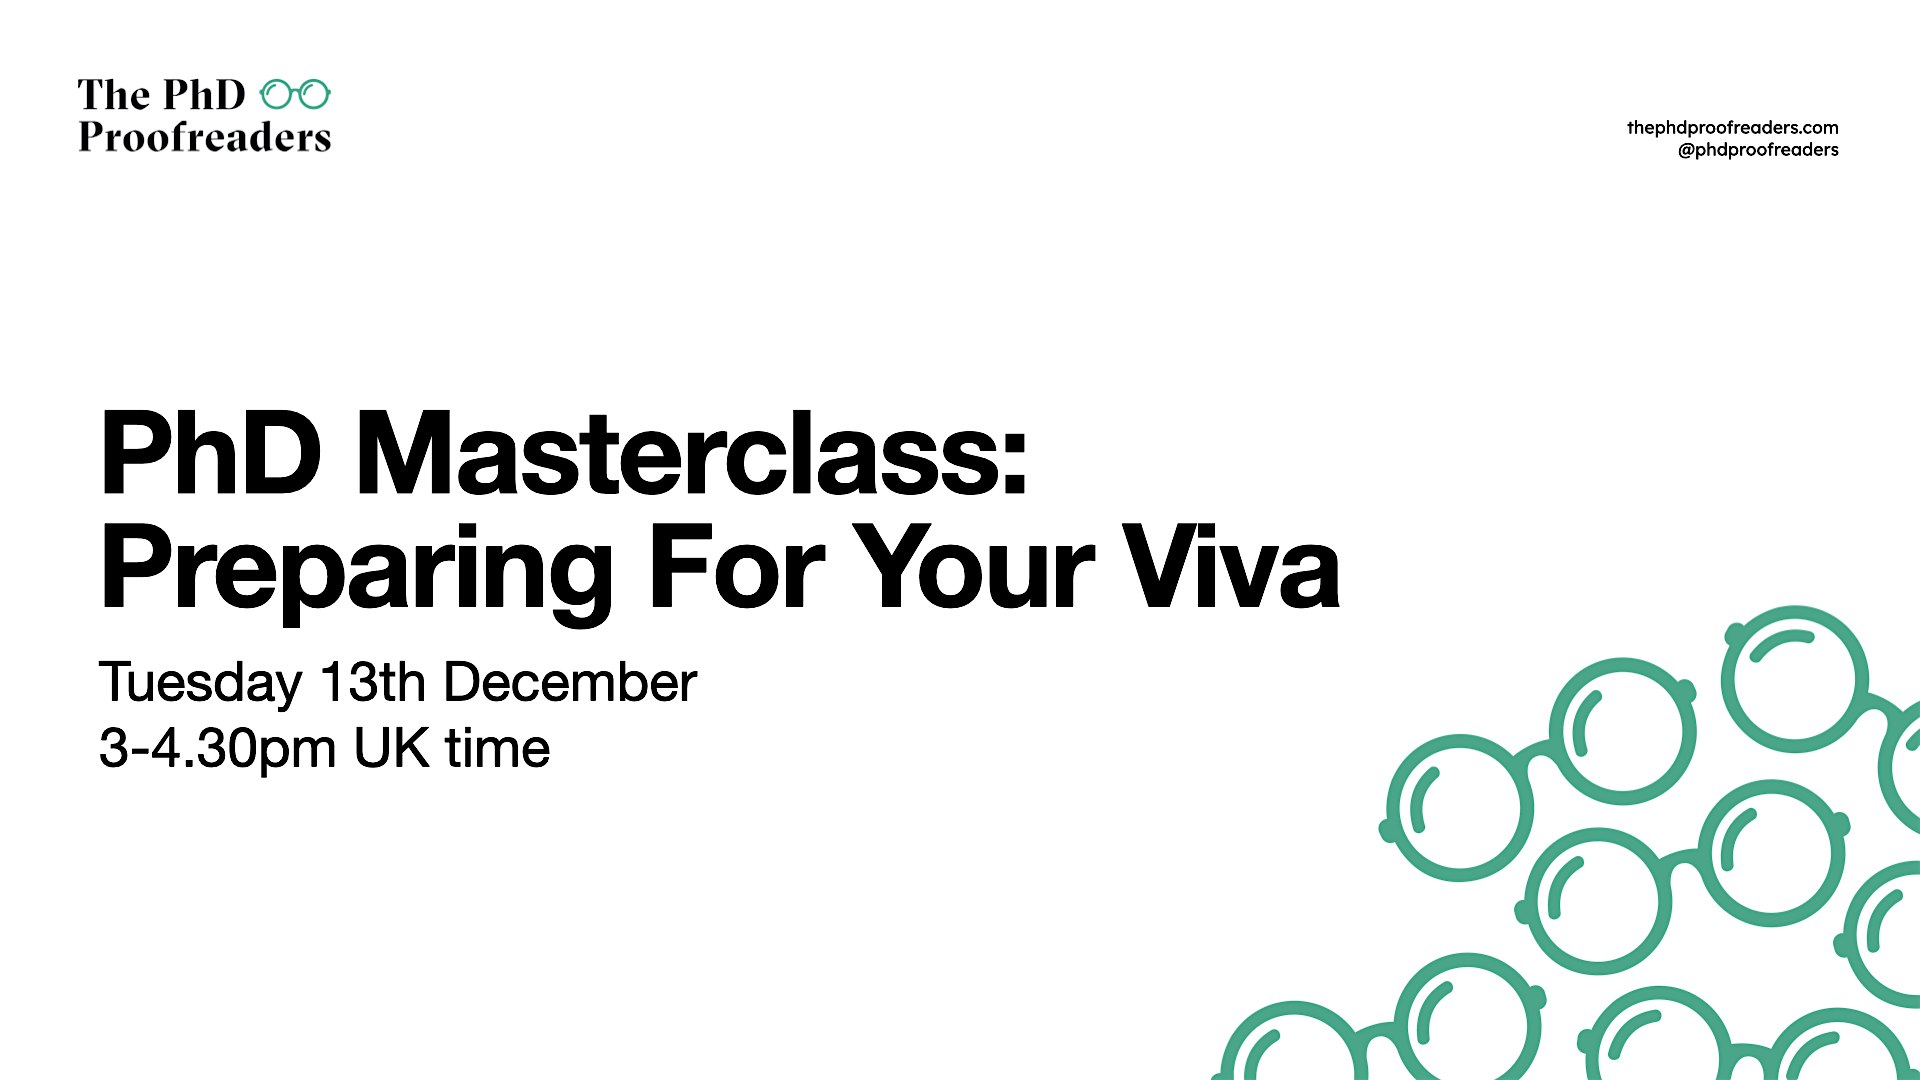 PhD Masterclass: Preparing For Your Viva